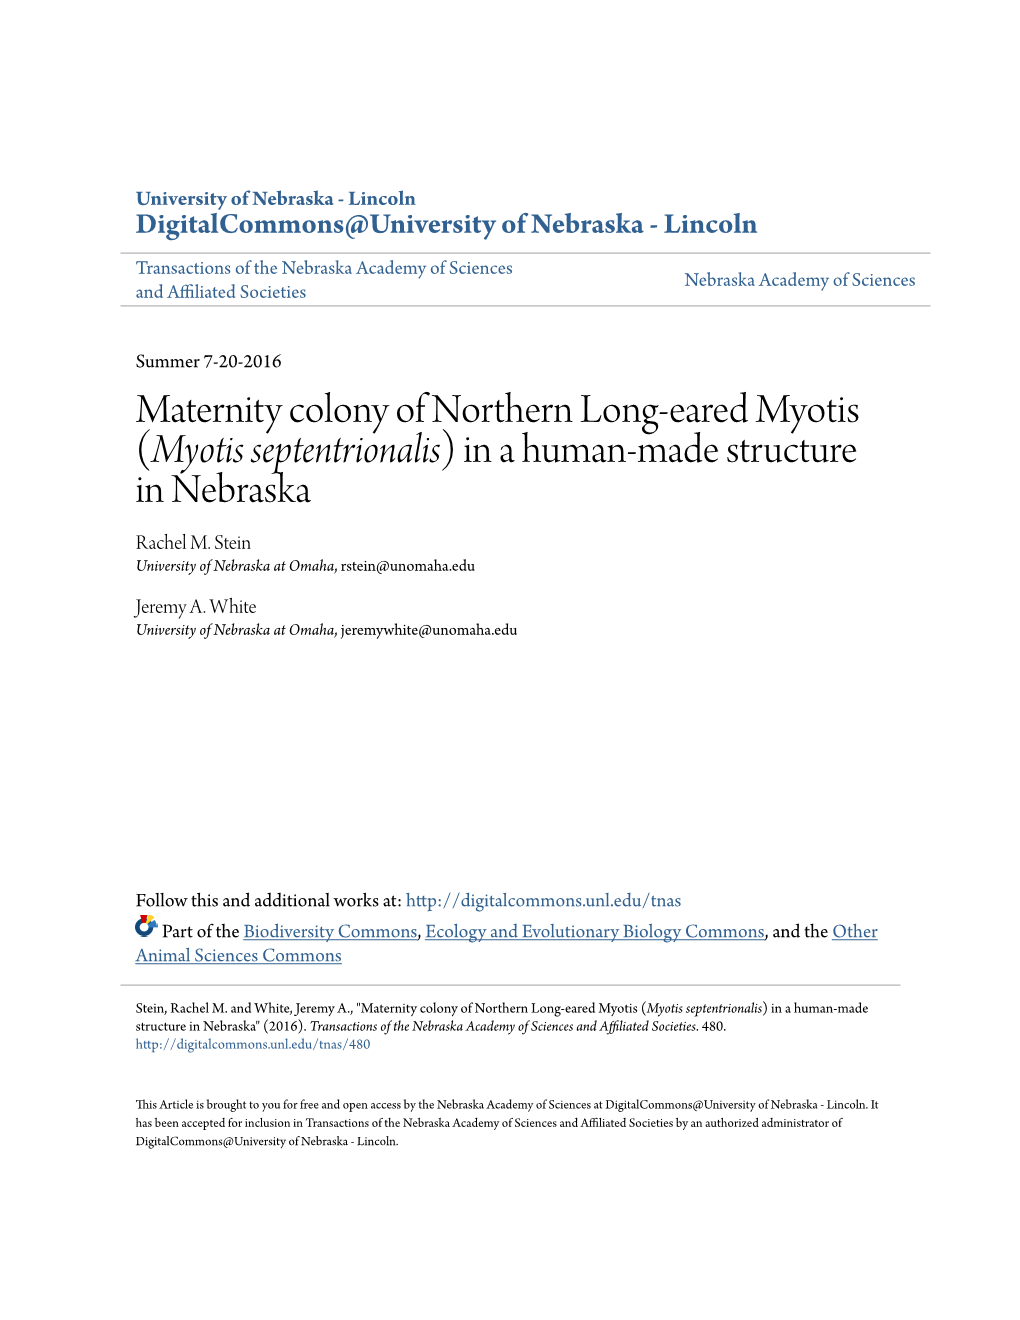 Maternity Colony of Northern Long-Eared Myotis (&lt;I&gt;Myotis